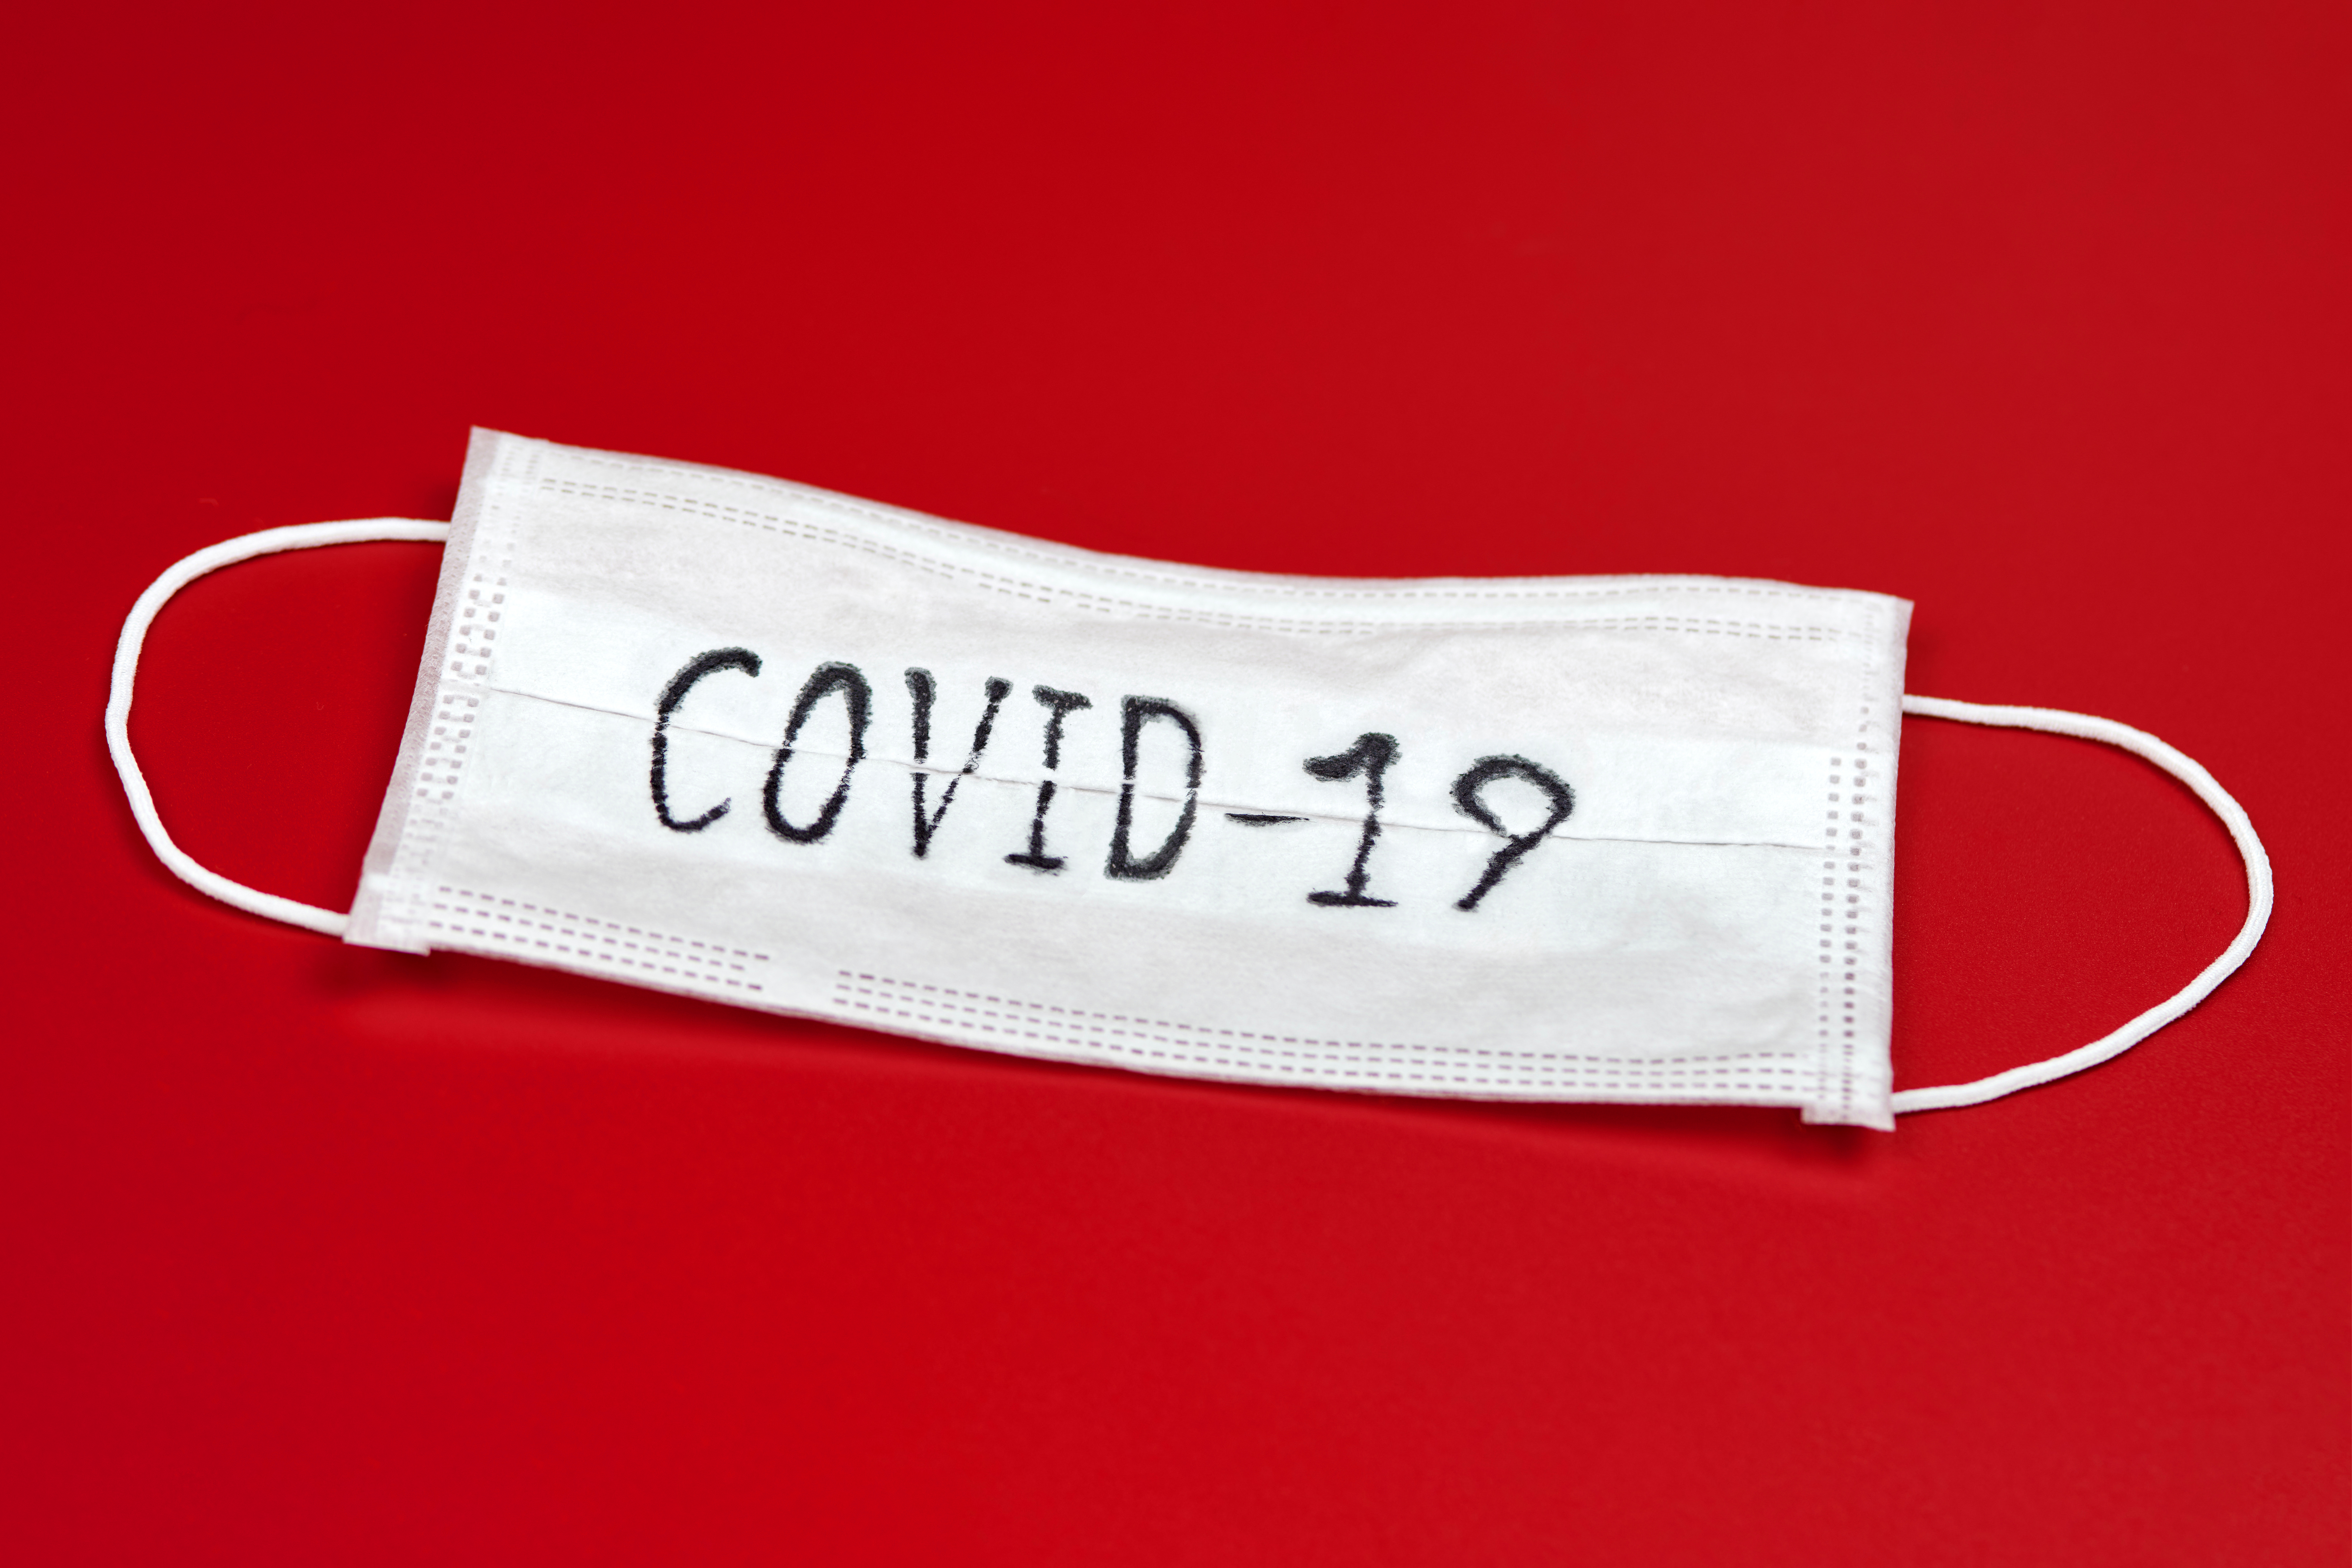 COVID-19 - Novel coronavirus - 2019-nCoV, WUHAN virus concept. Surgical mask protective mask with C...